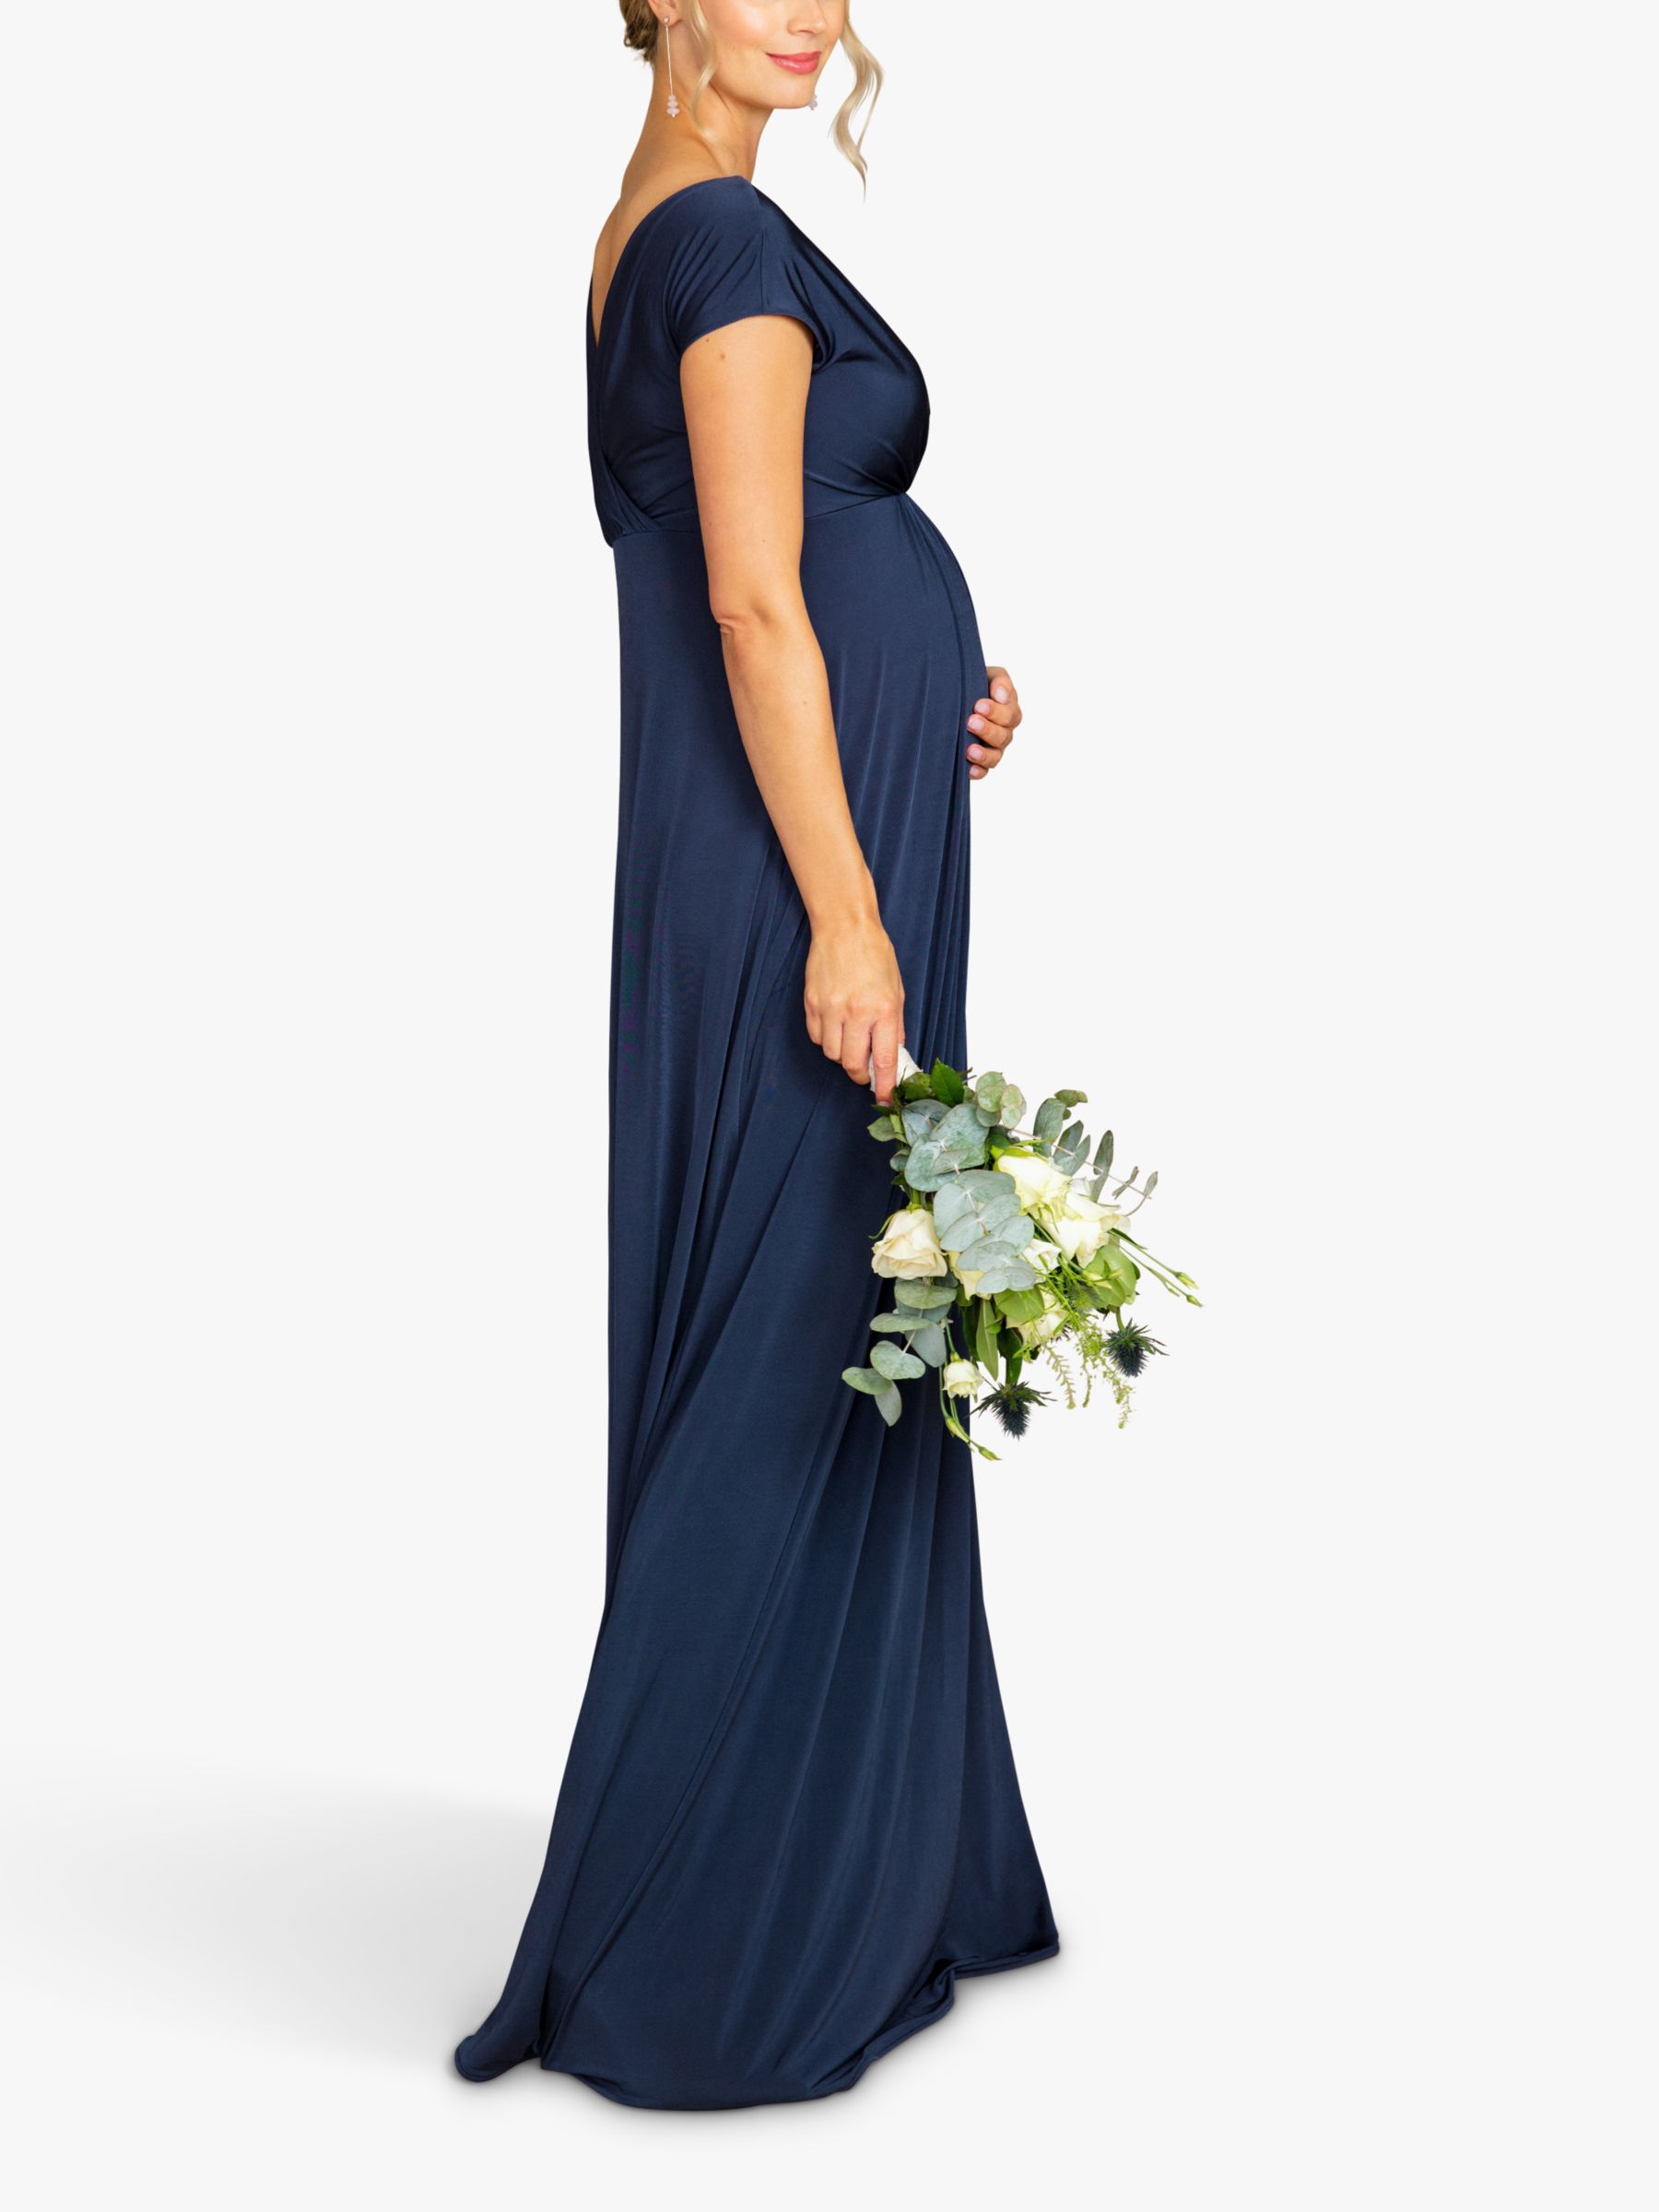 Buy Tiffany Rose Francesca Maternity Maxi Dress Online at johnlewis.com